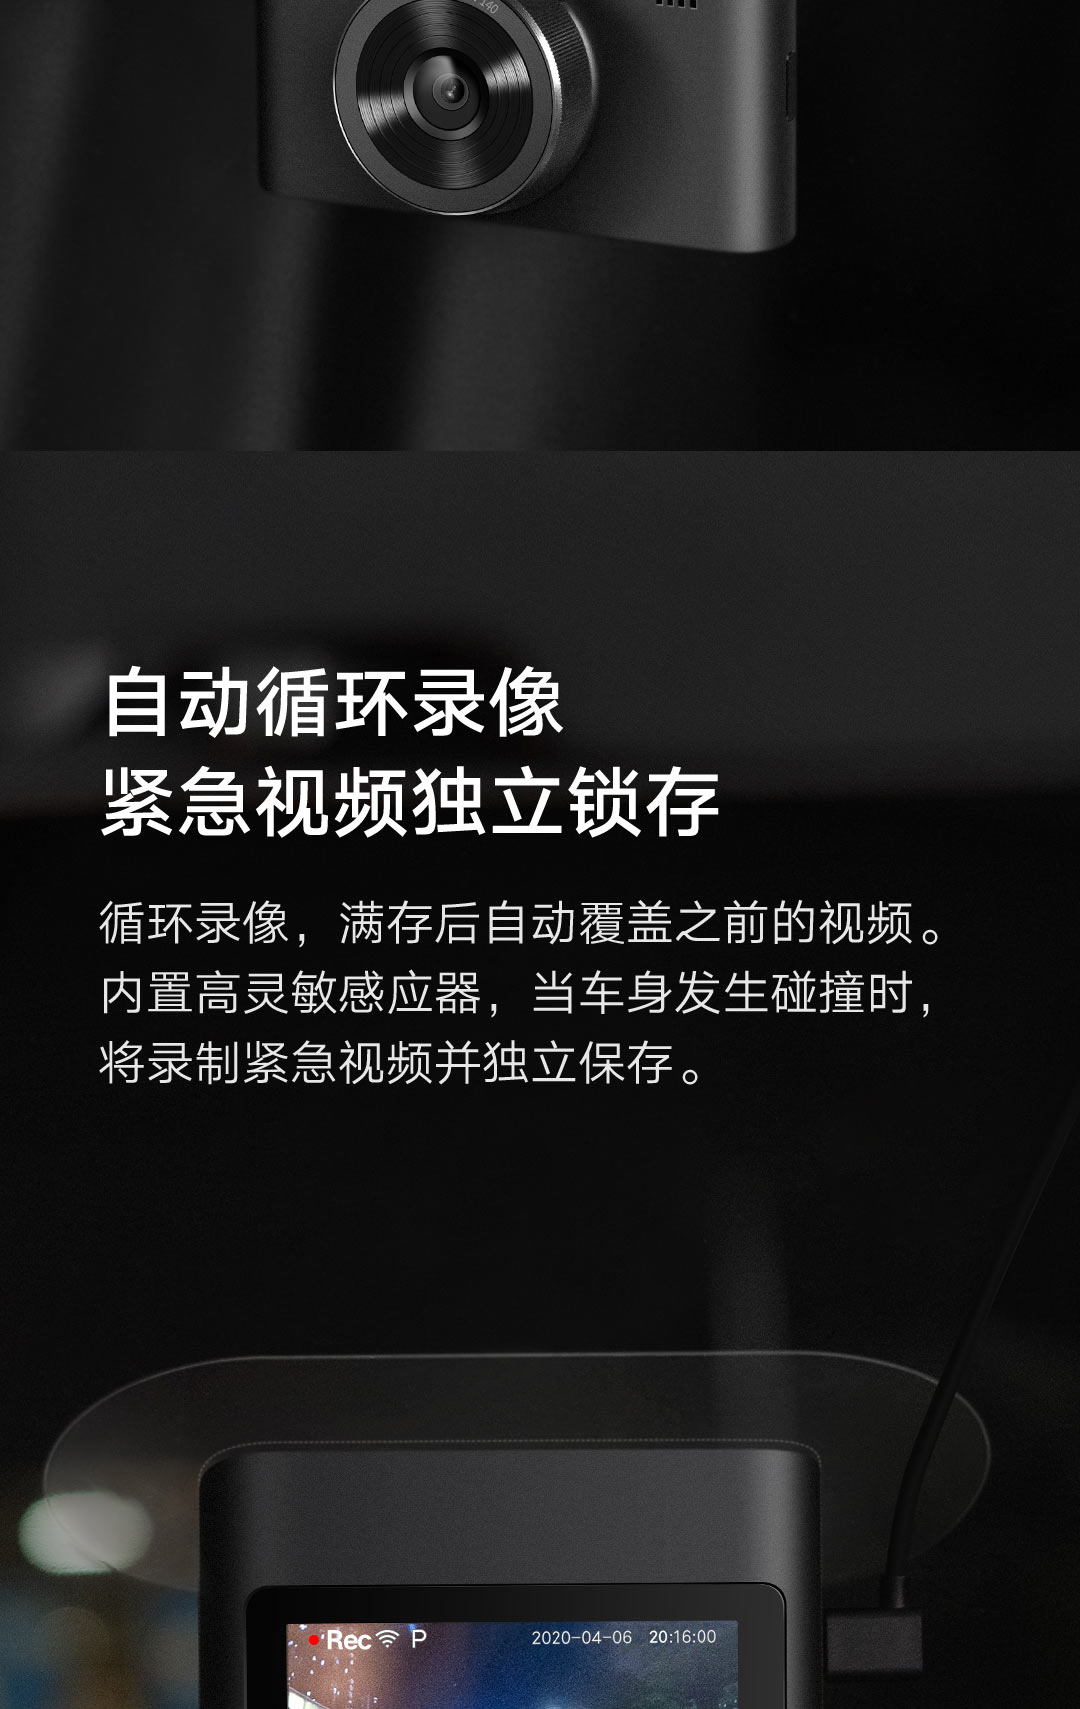 Xiaomi Mi Dash Cam 2 — AMV Store